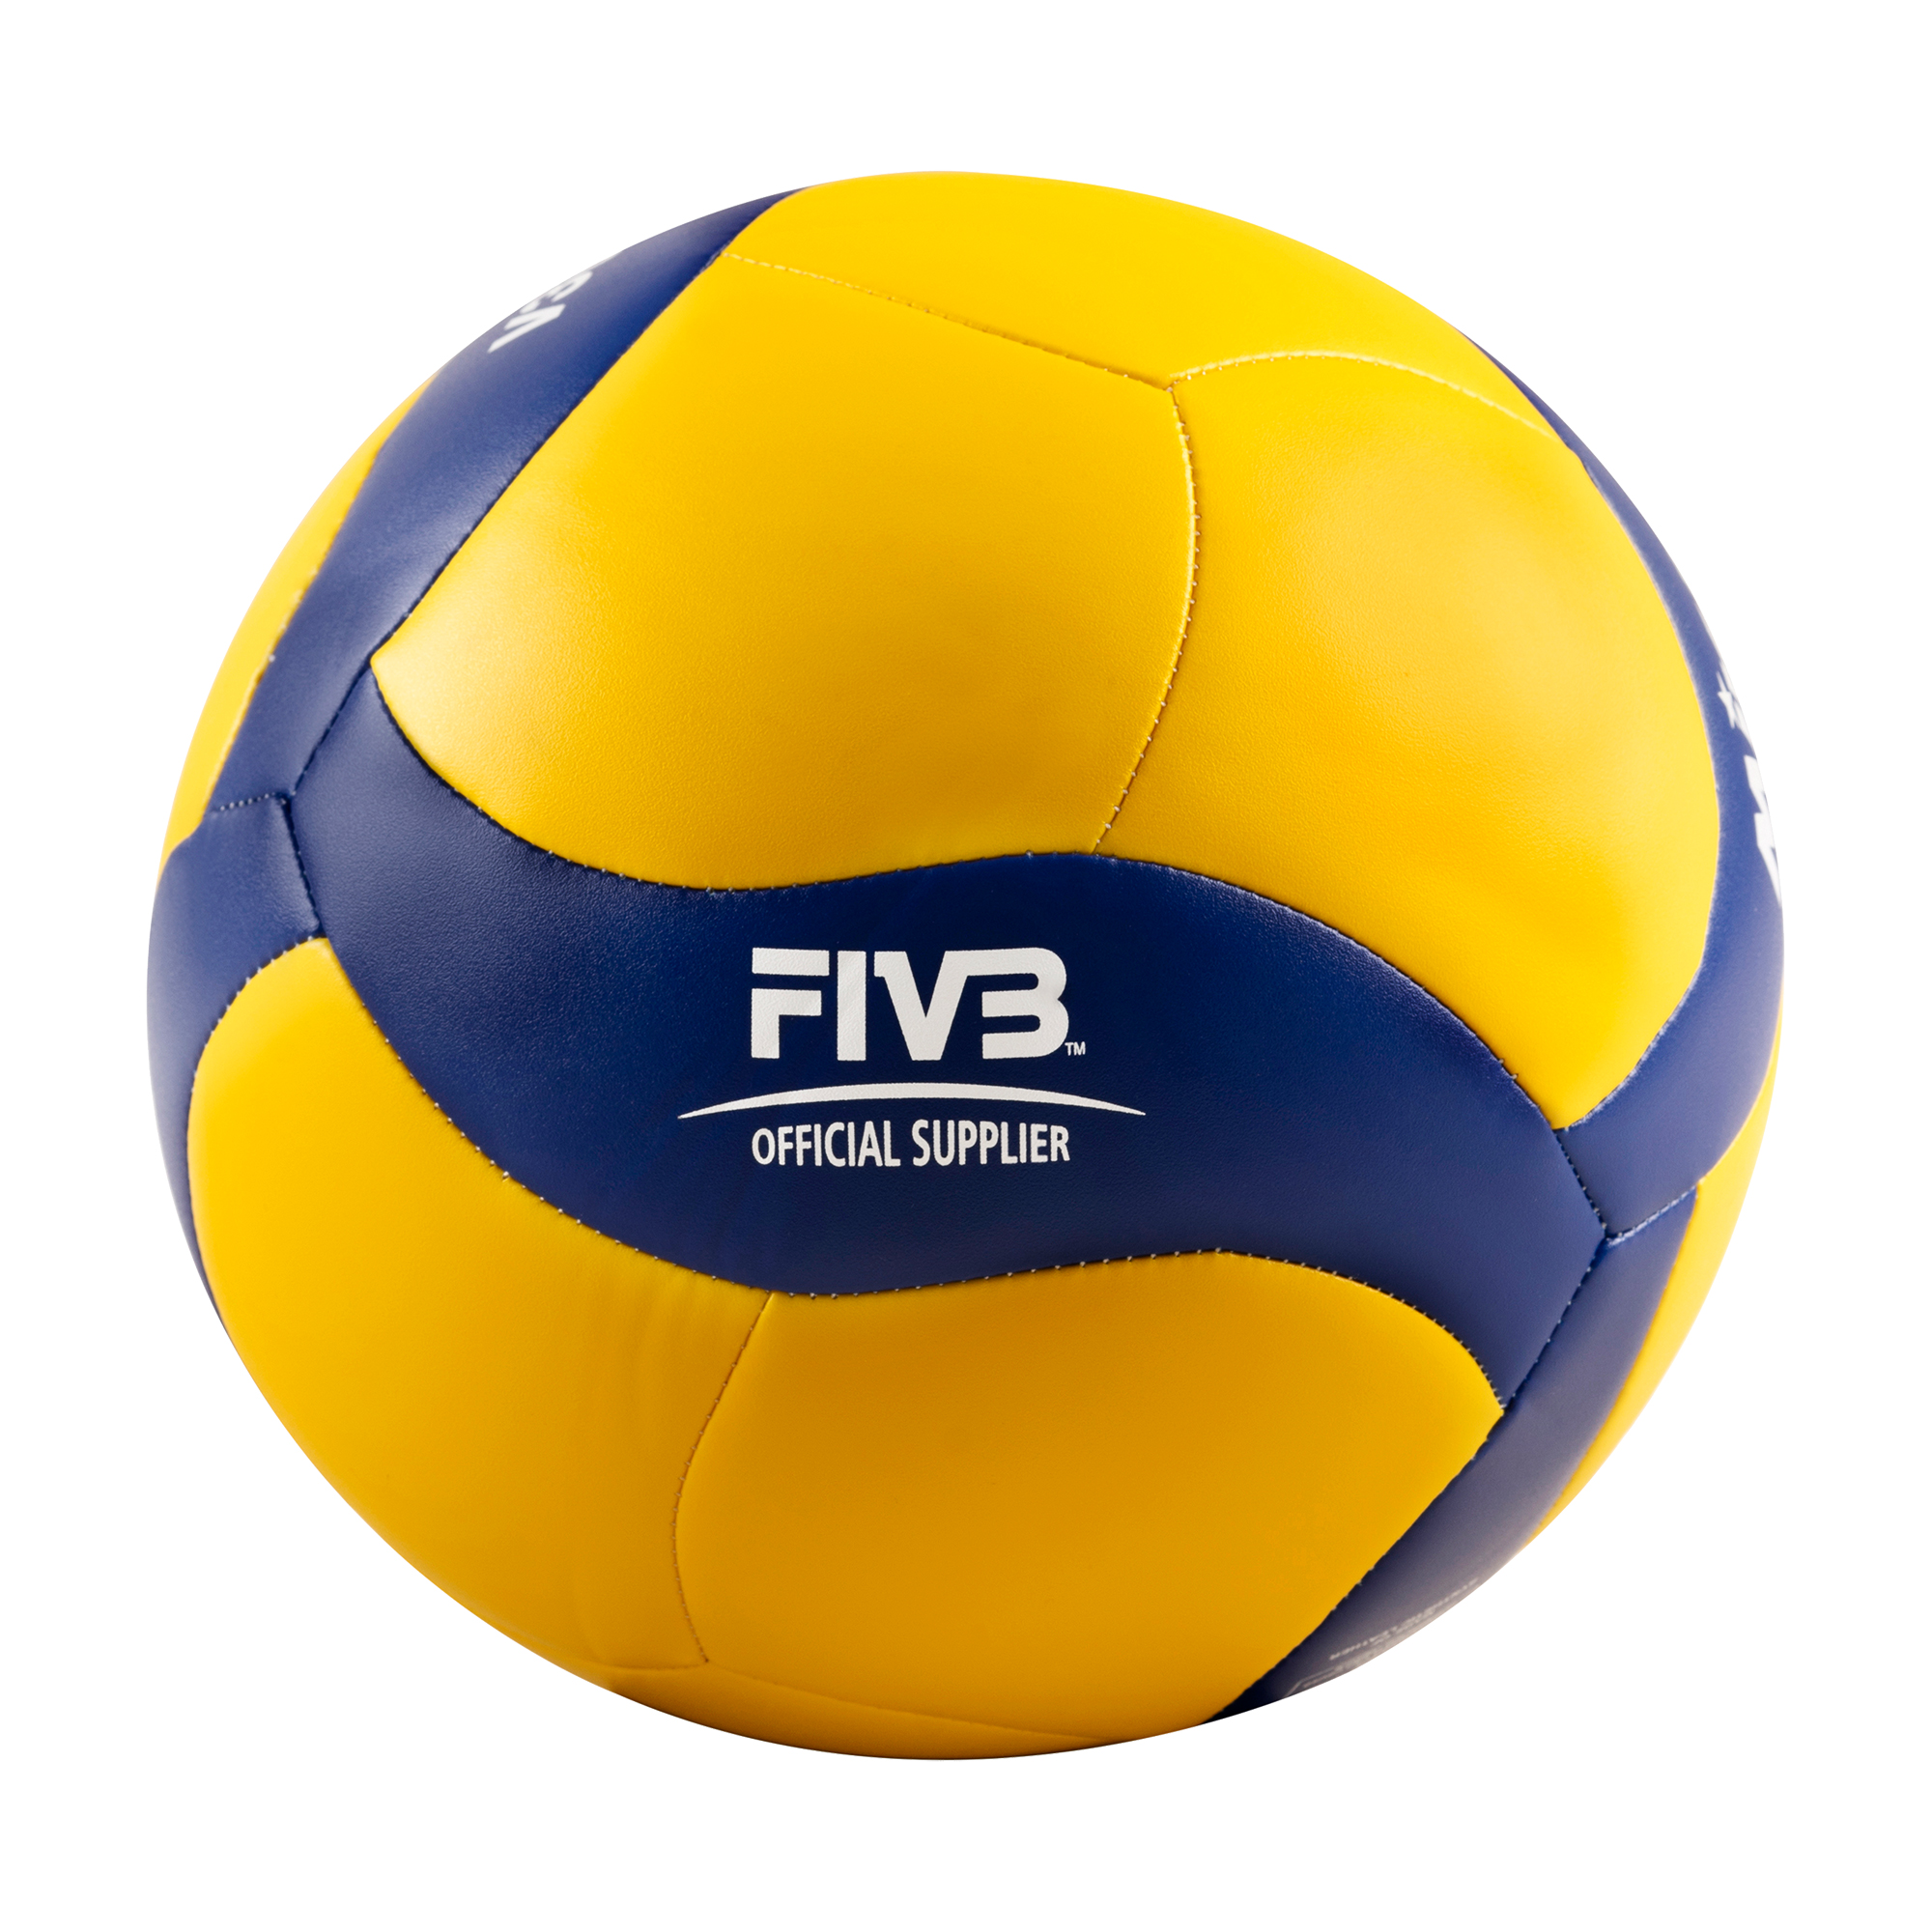 Mikasa V360W Volleyball